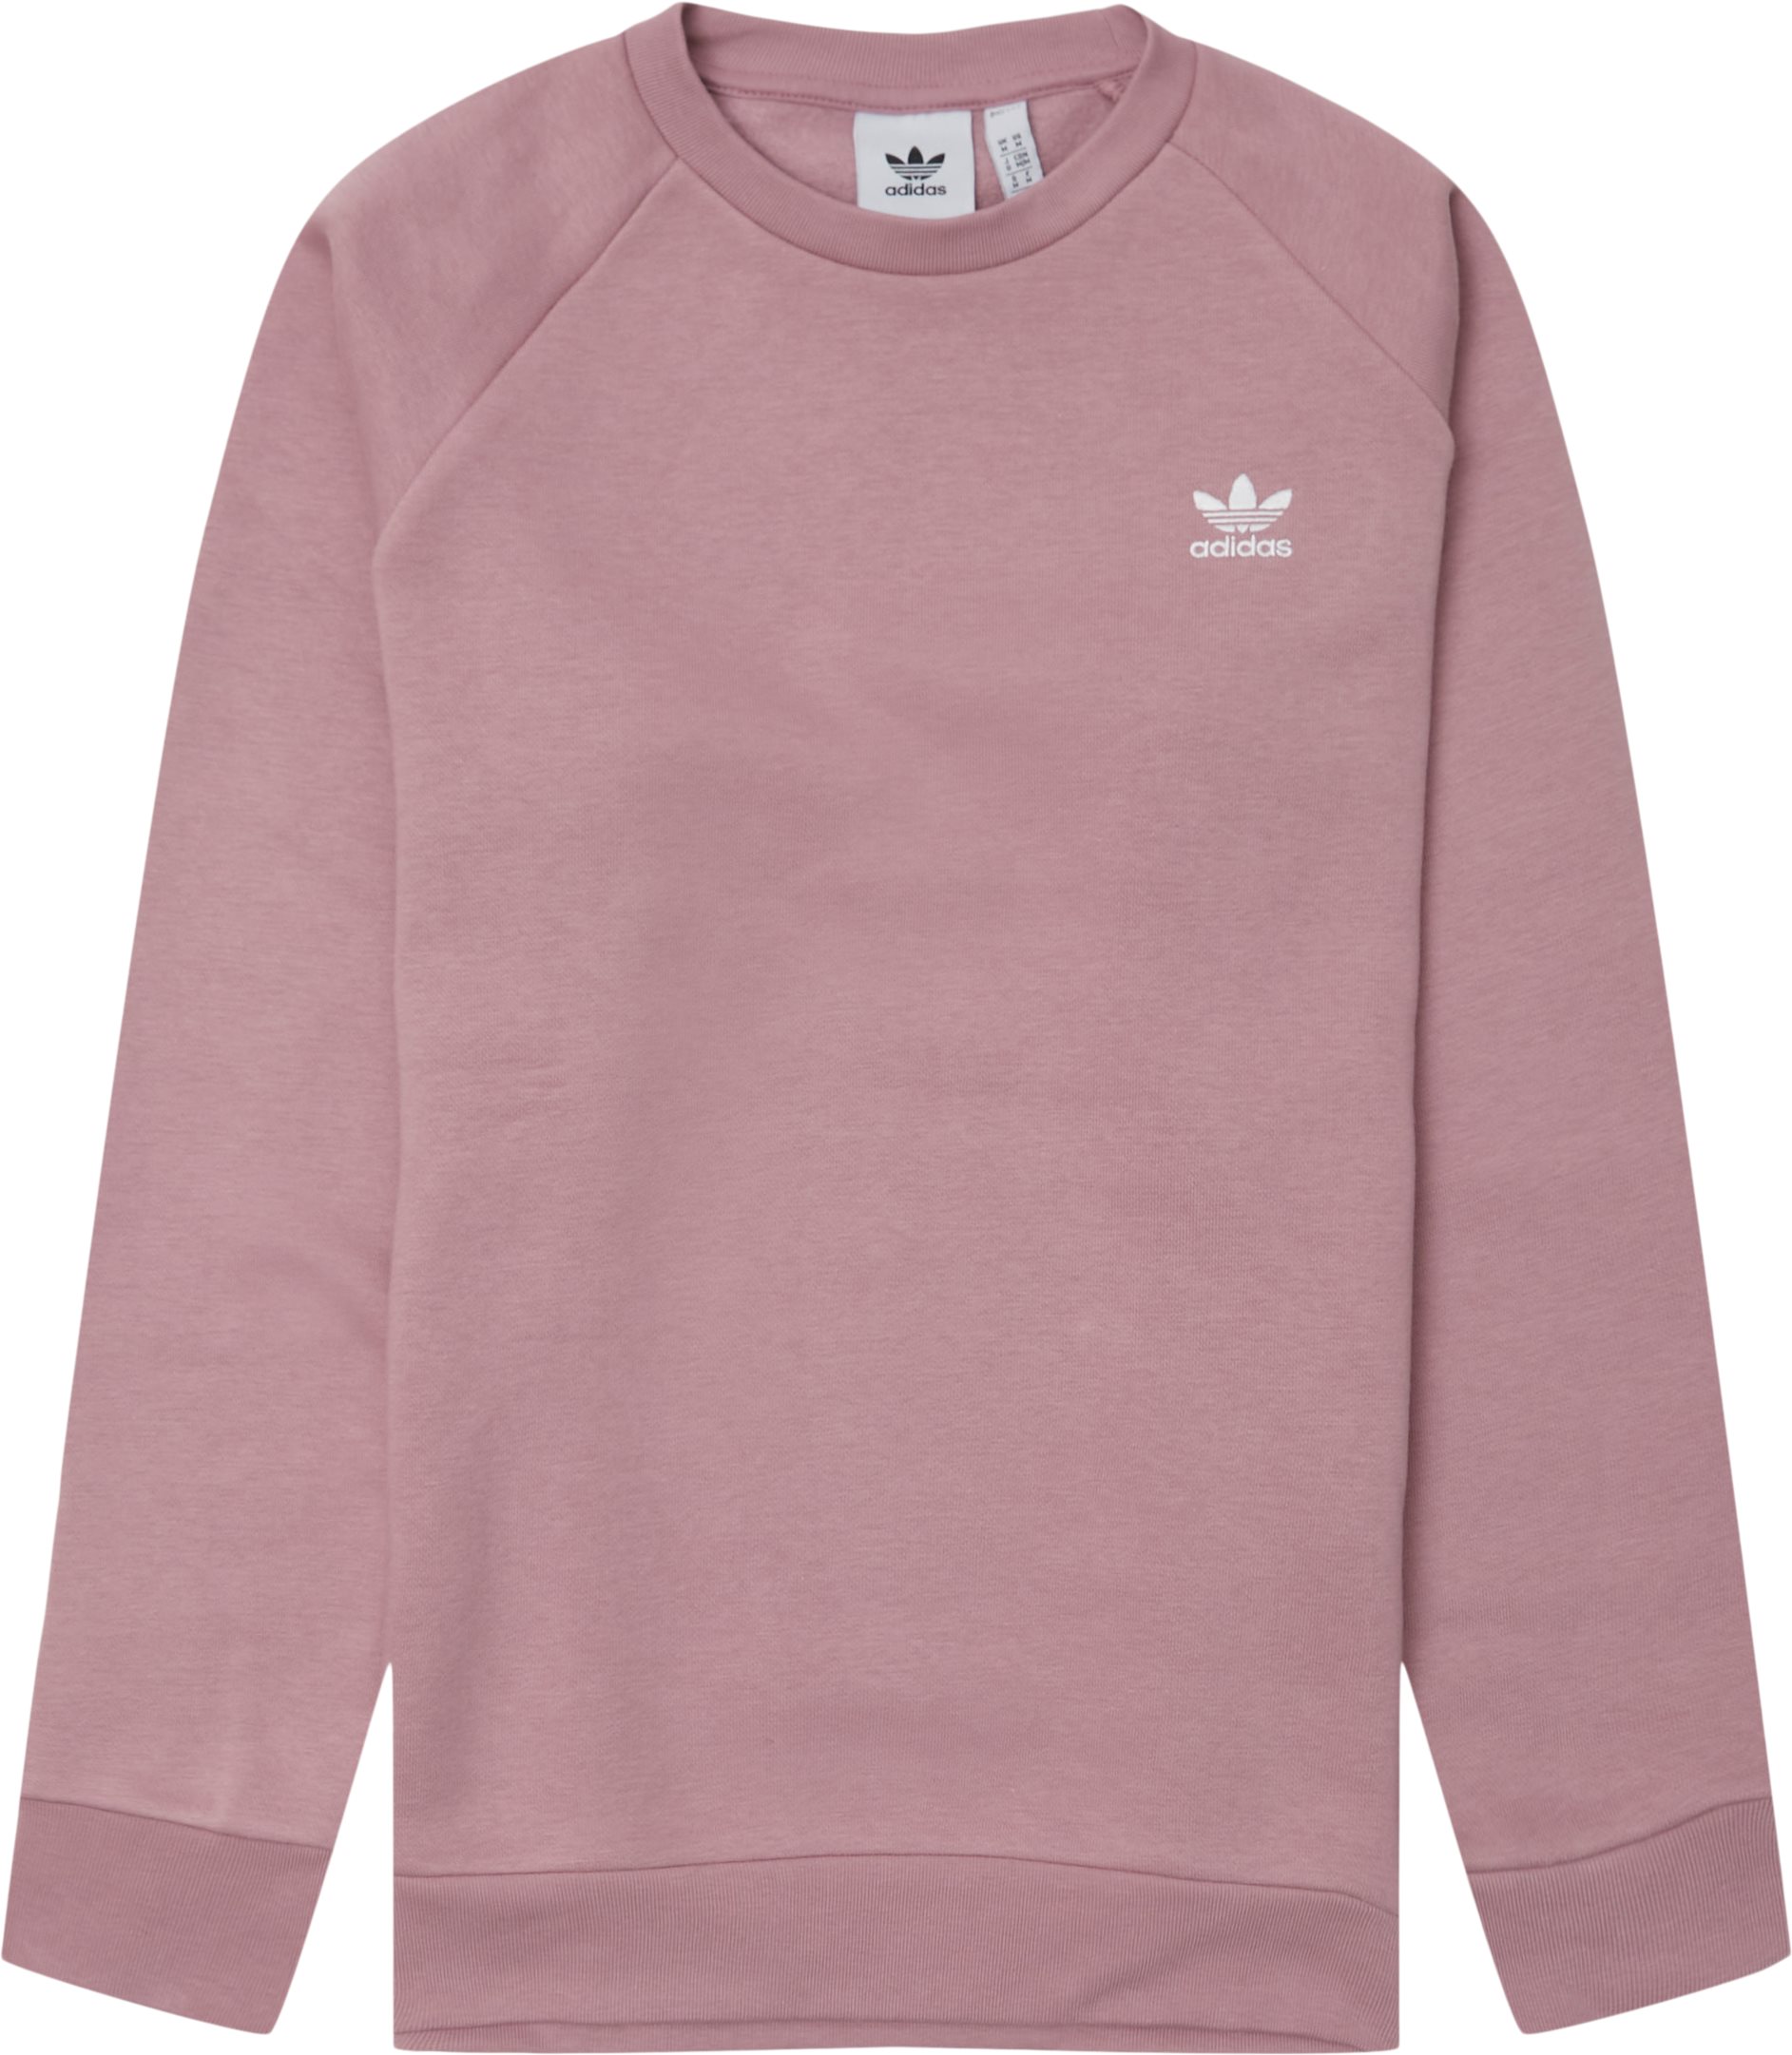 Adidas Originals Sweatshirts ESSENTIAL CREW SS22 Rosa